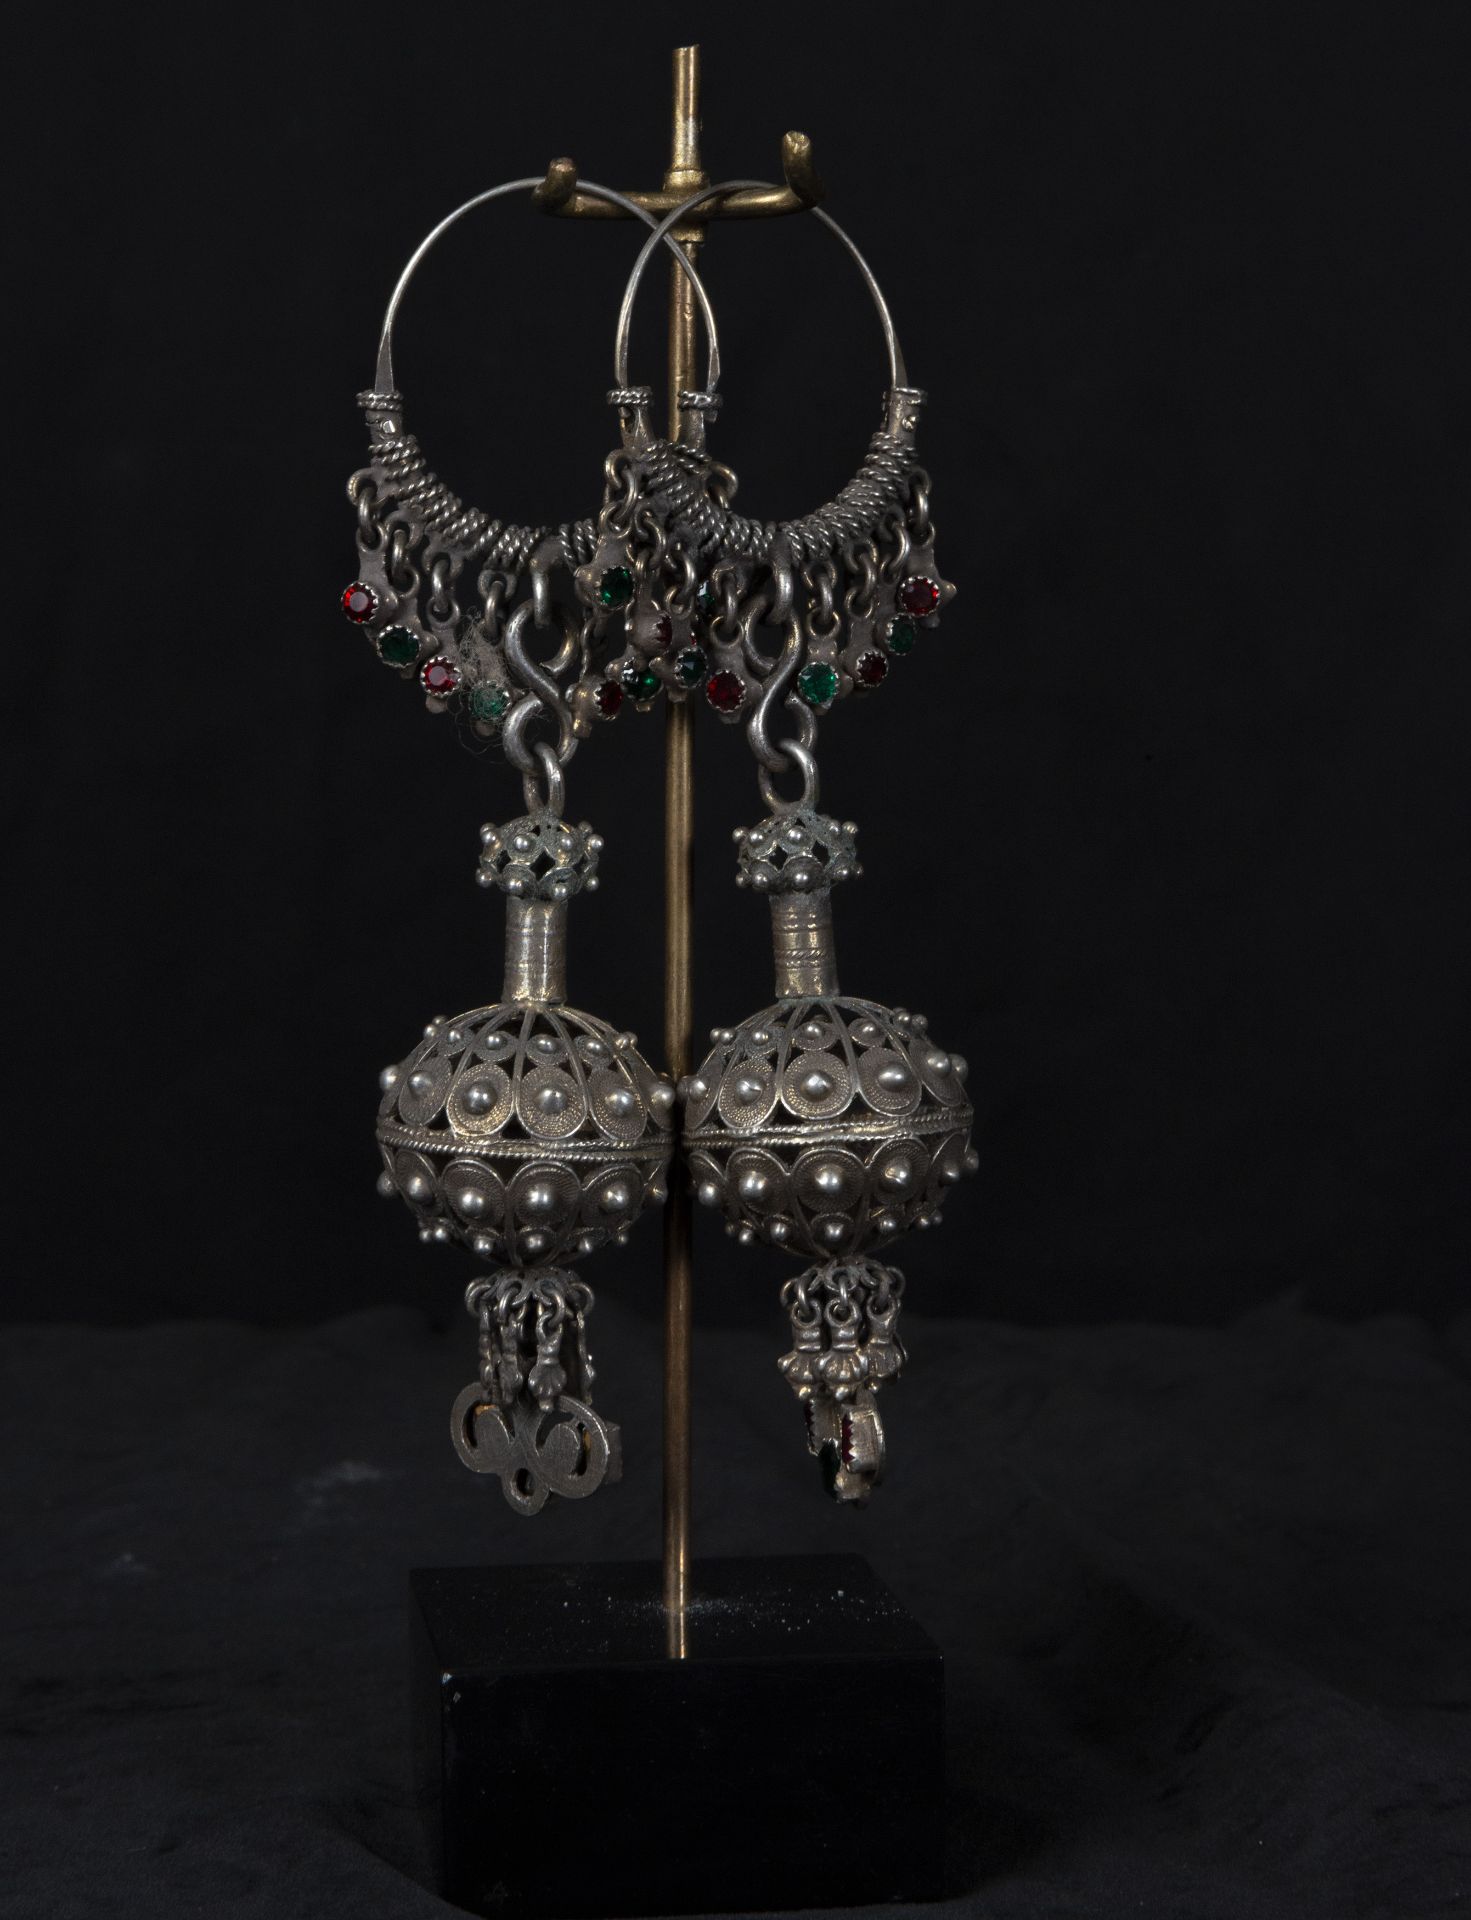 Beautiful Salamanca "charro" earrings in fine silver filigree from the 19th century